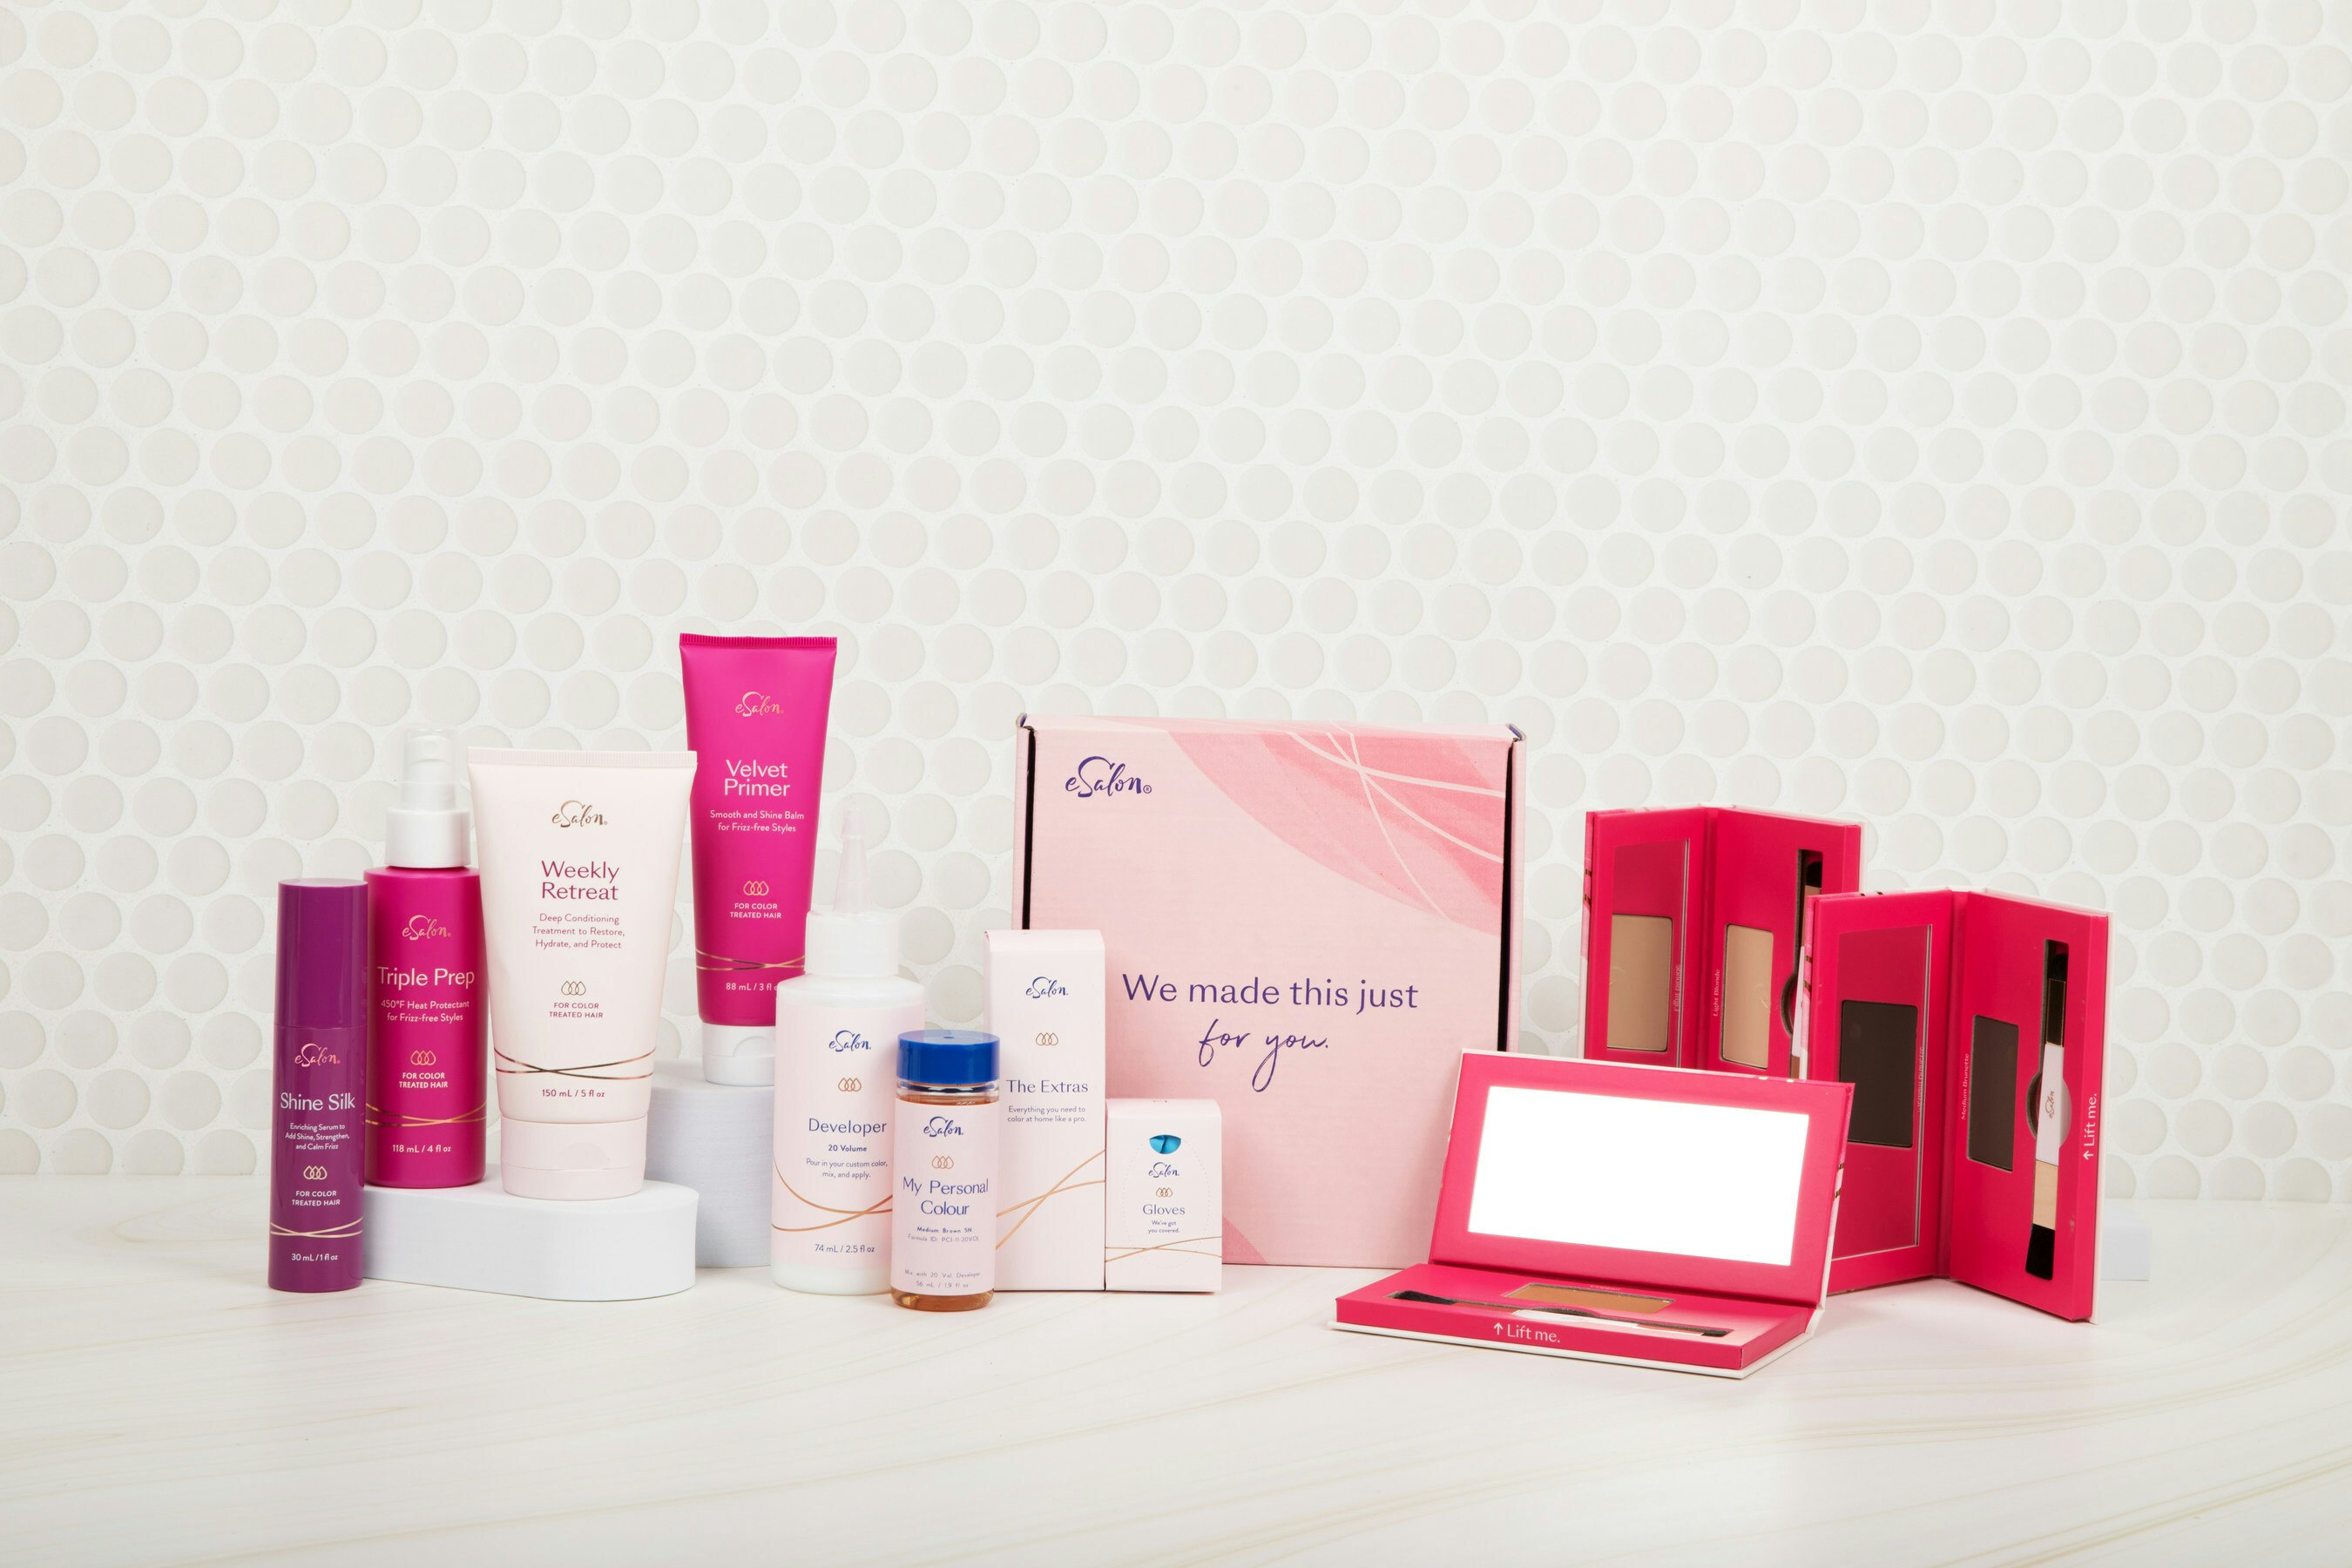 Skincare products manufacturer OleHenriksen announces brand relaunch